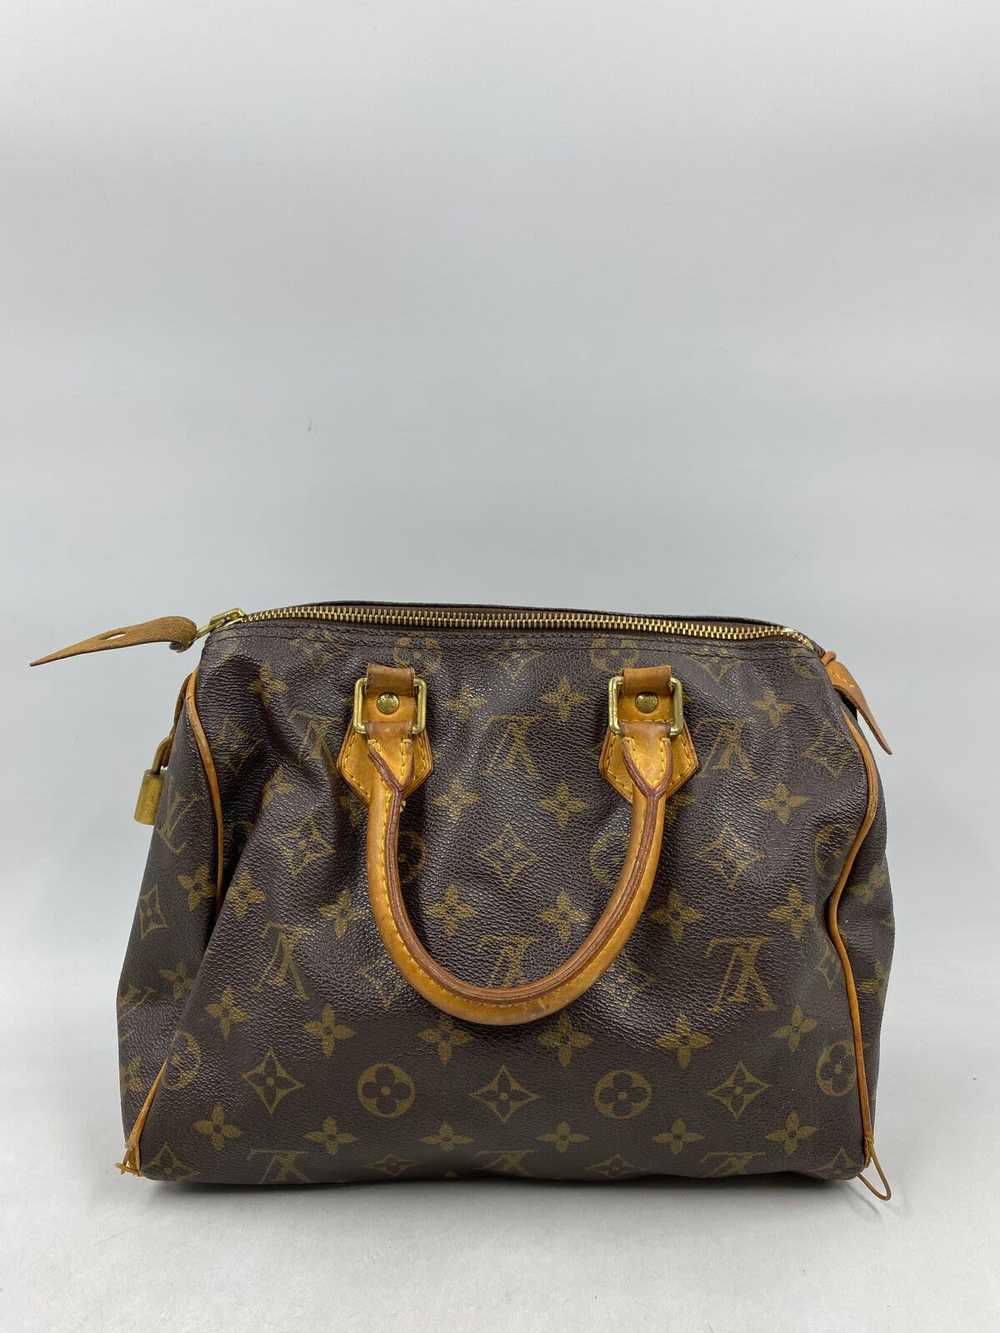 Authentic Louis Vuitton Brown Monogram Handbag - image 2